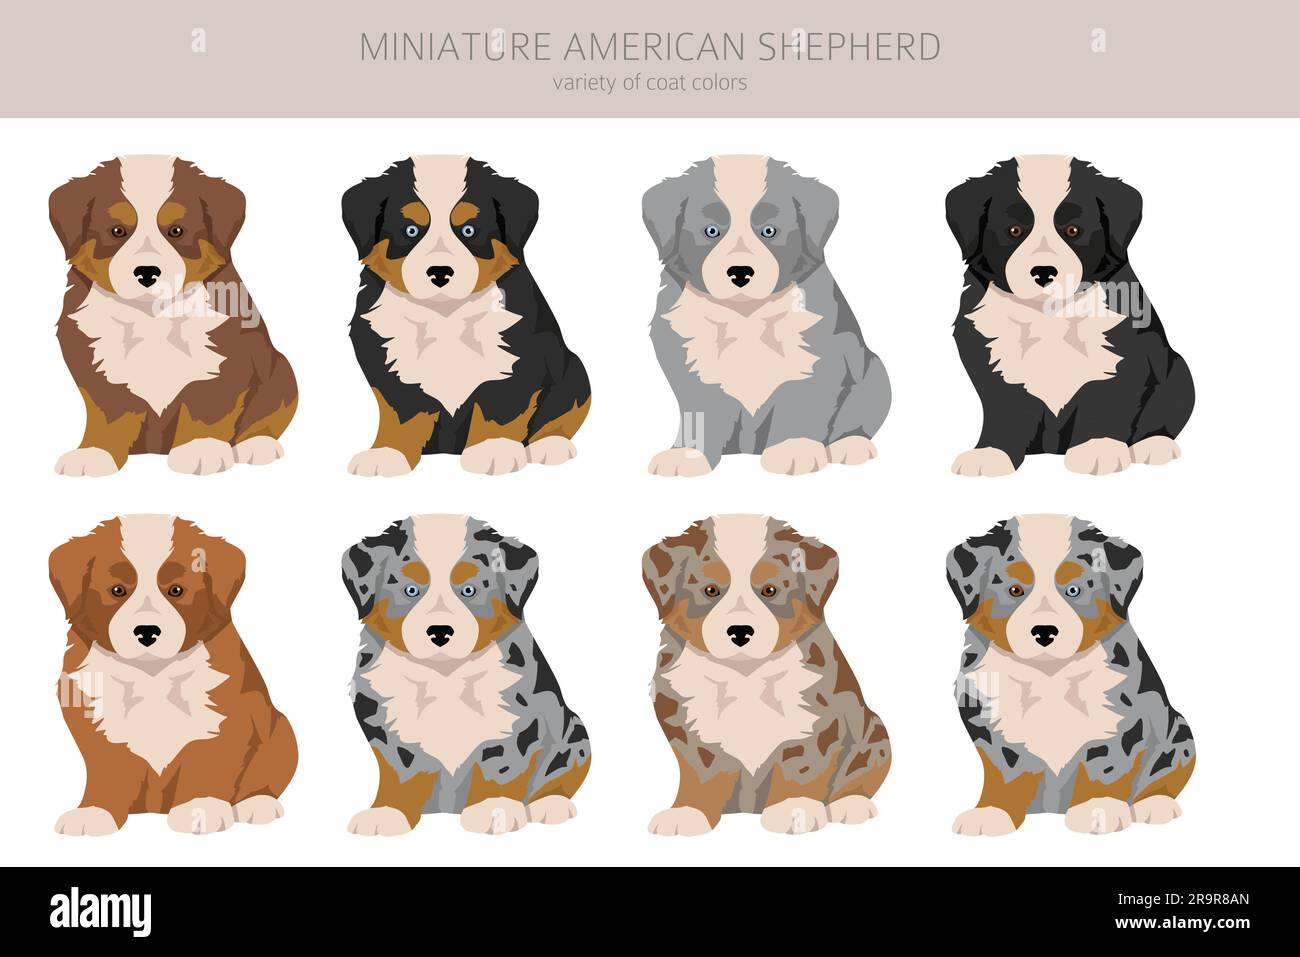 Miniature american shepherd puppies clipart. Different poses, coat colors set.  Vector illustration Stock Vector